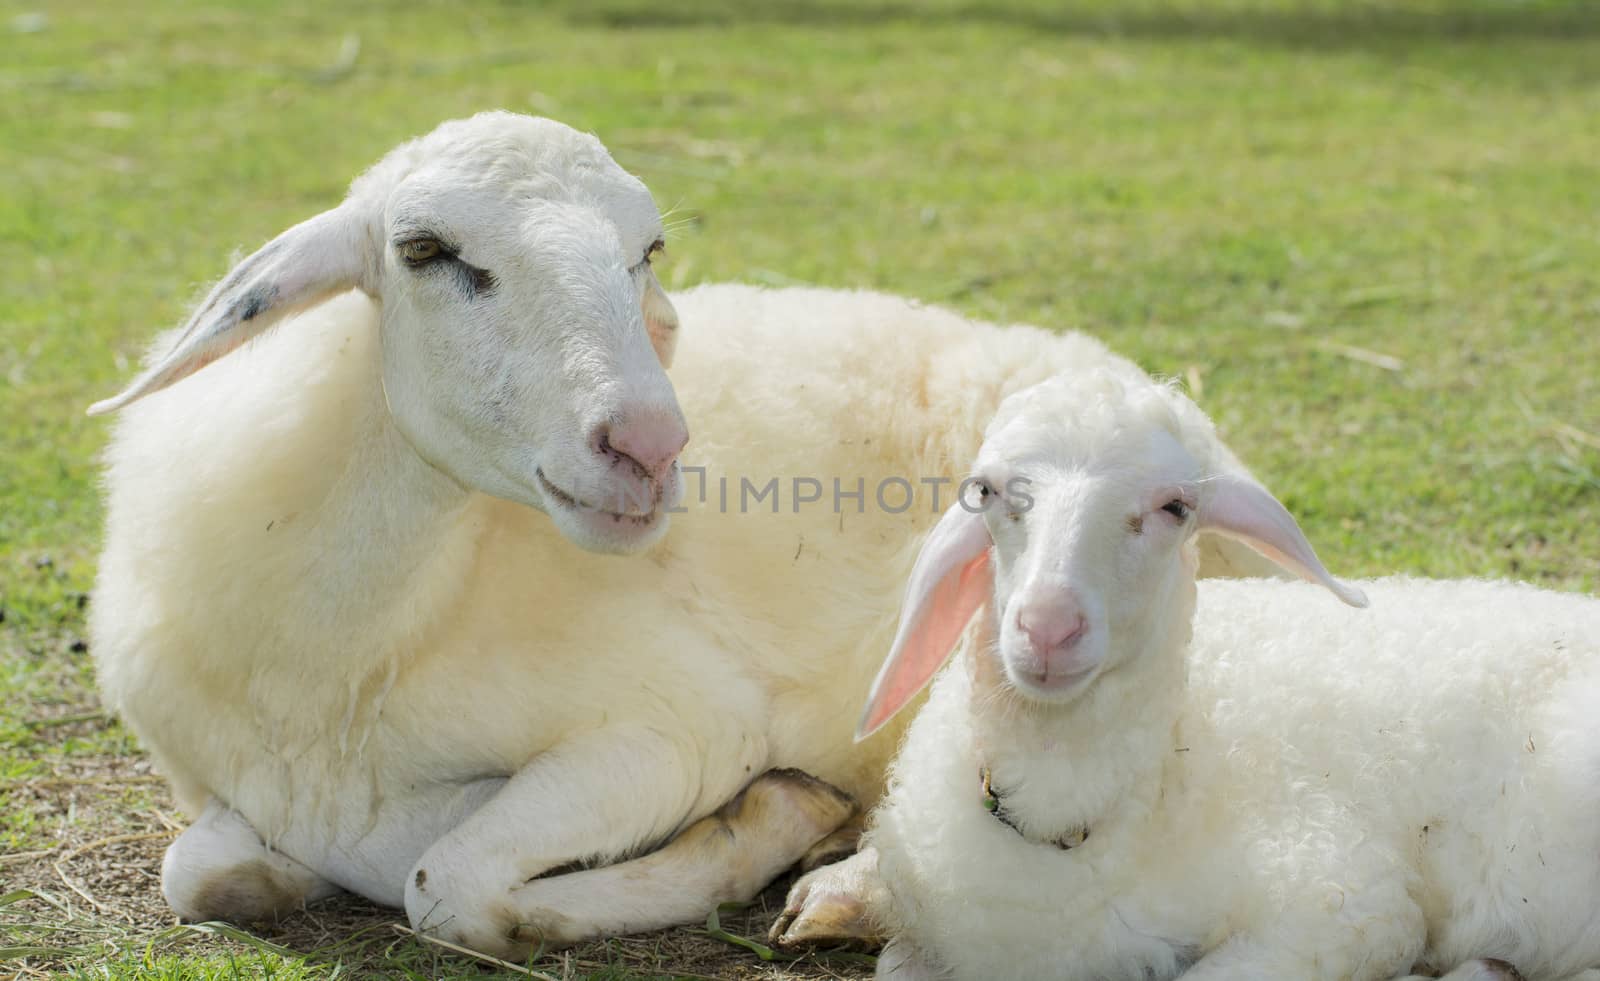 Sheep Farm by Sorapop